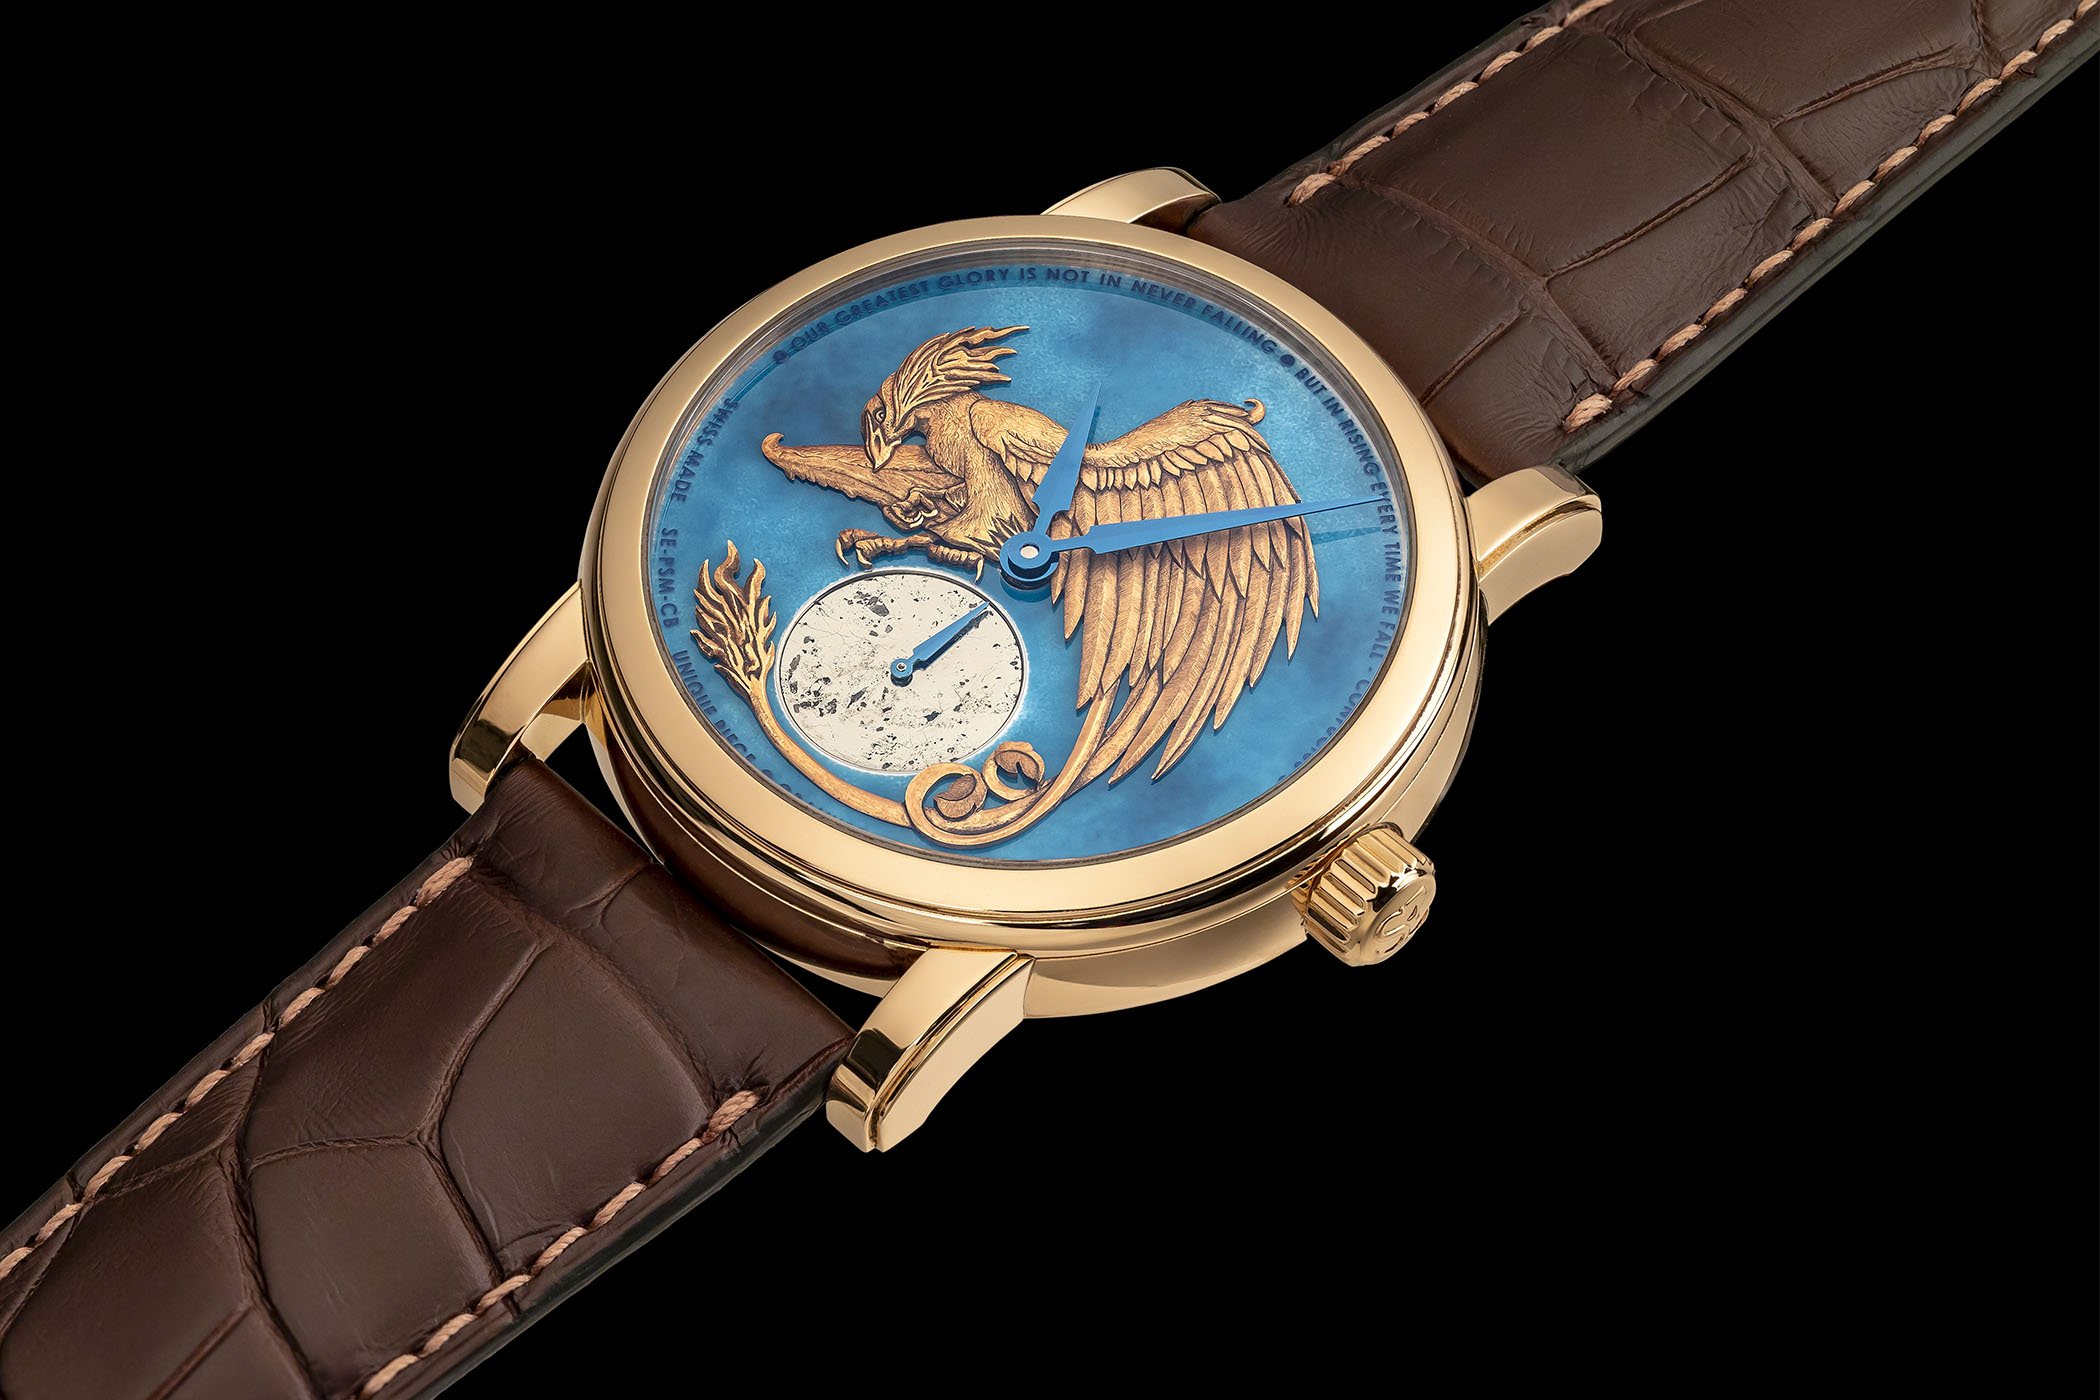 The Schwarz Etienne Roma Phoenix Unique Watch